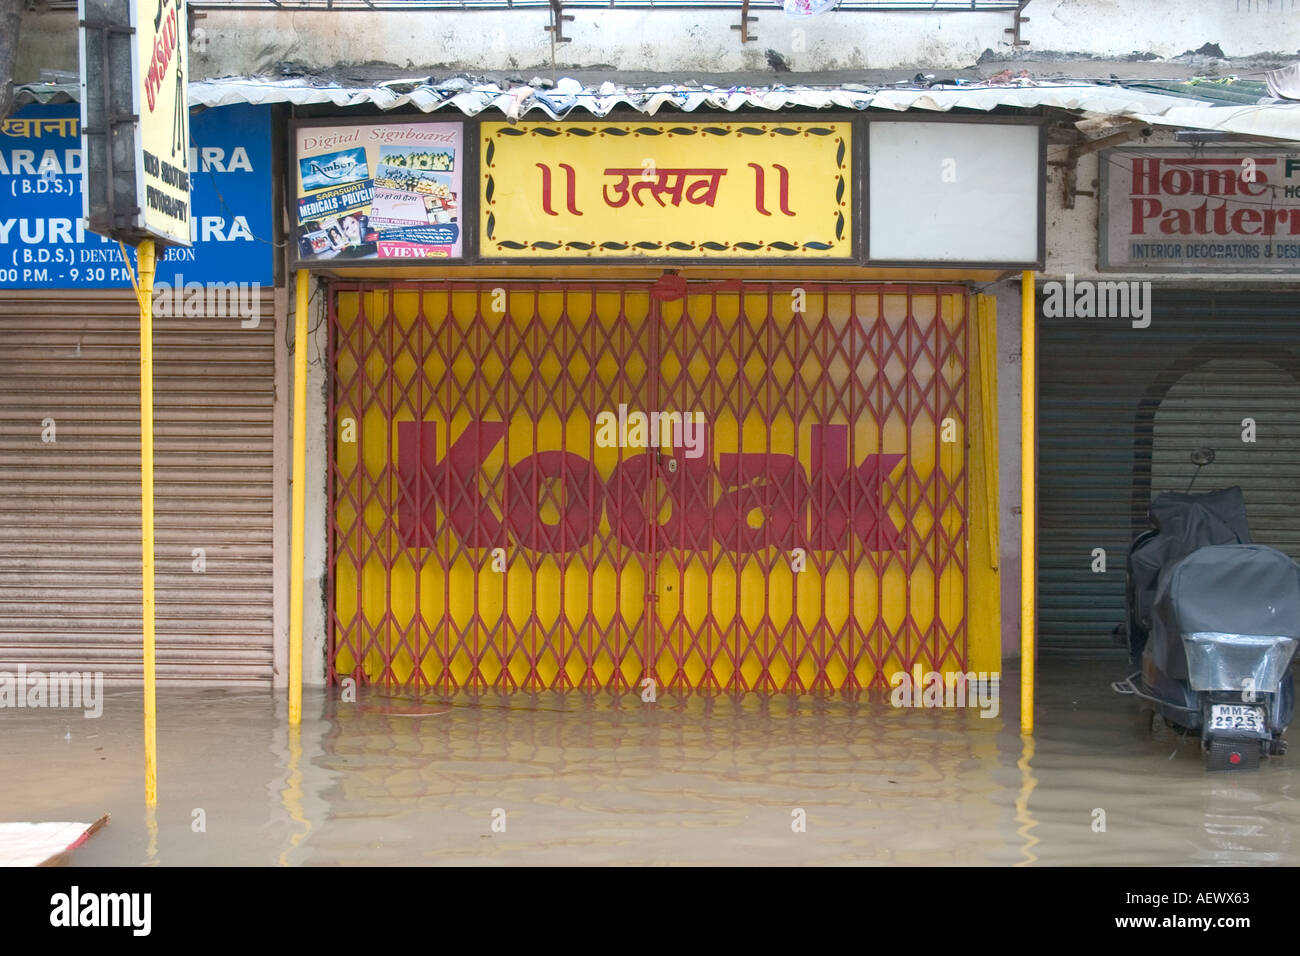 kodak shop closed submerged in monsoon rain floods water world record rain in Bombay now Mumbai India Stock Photo